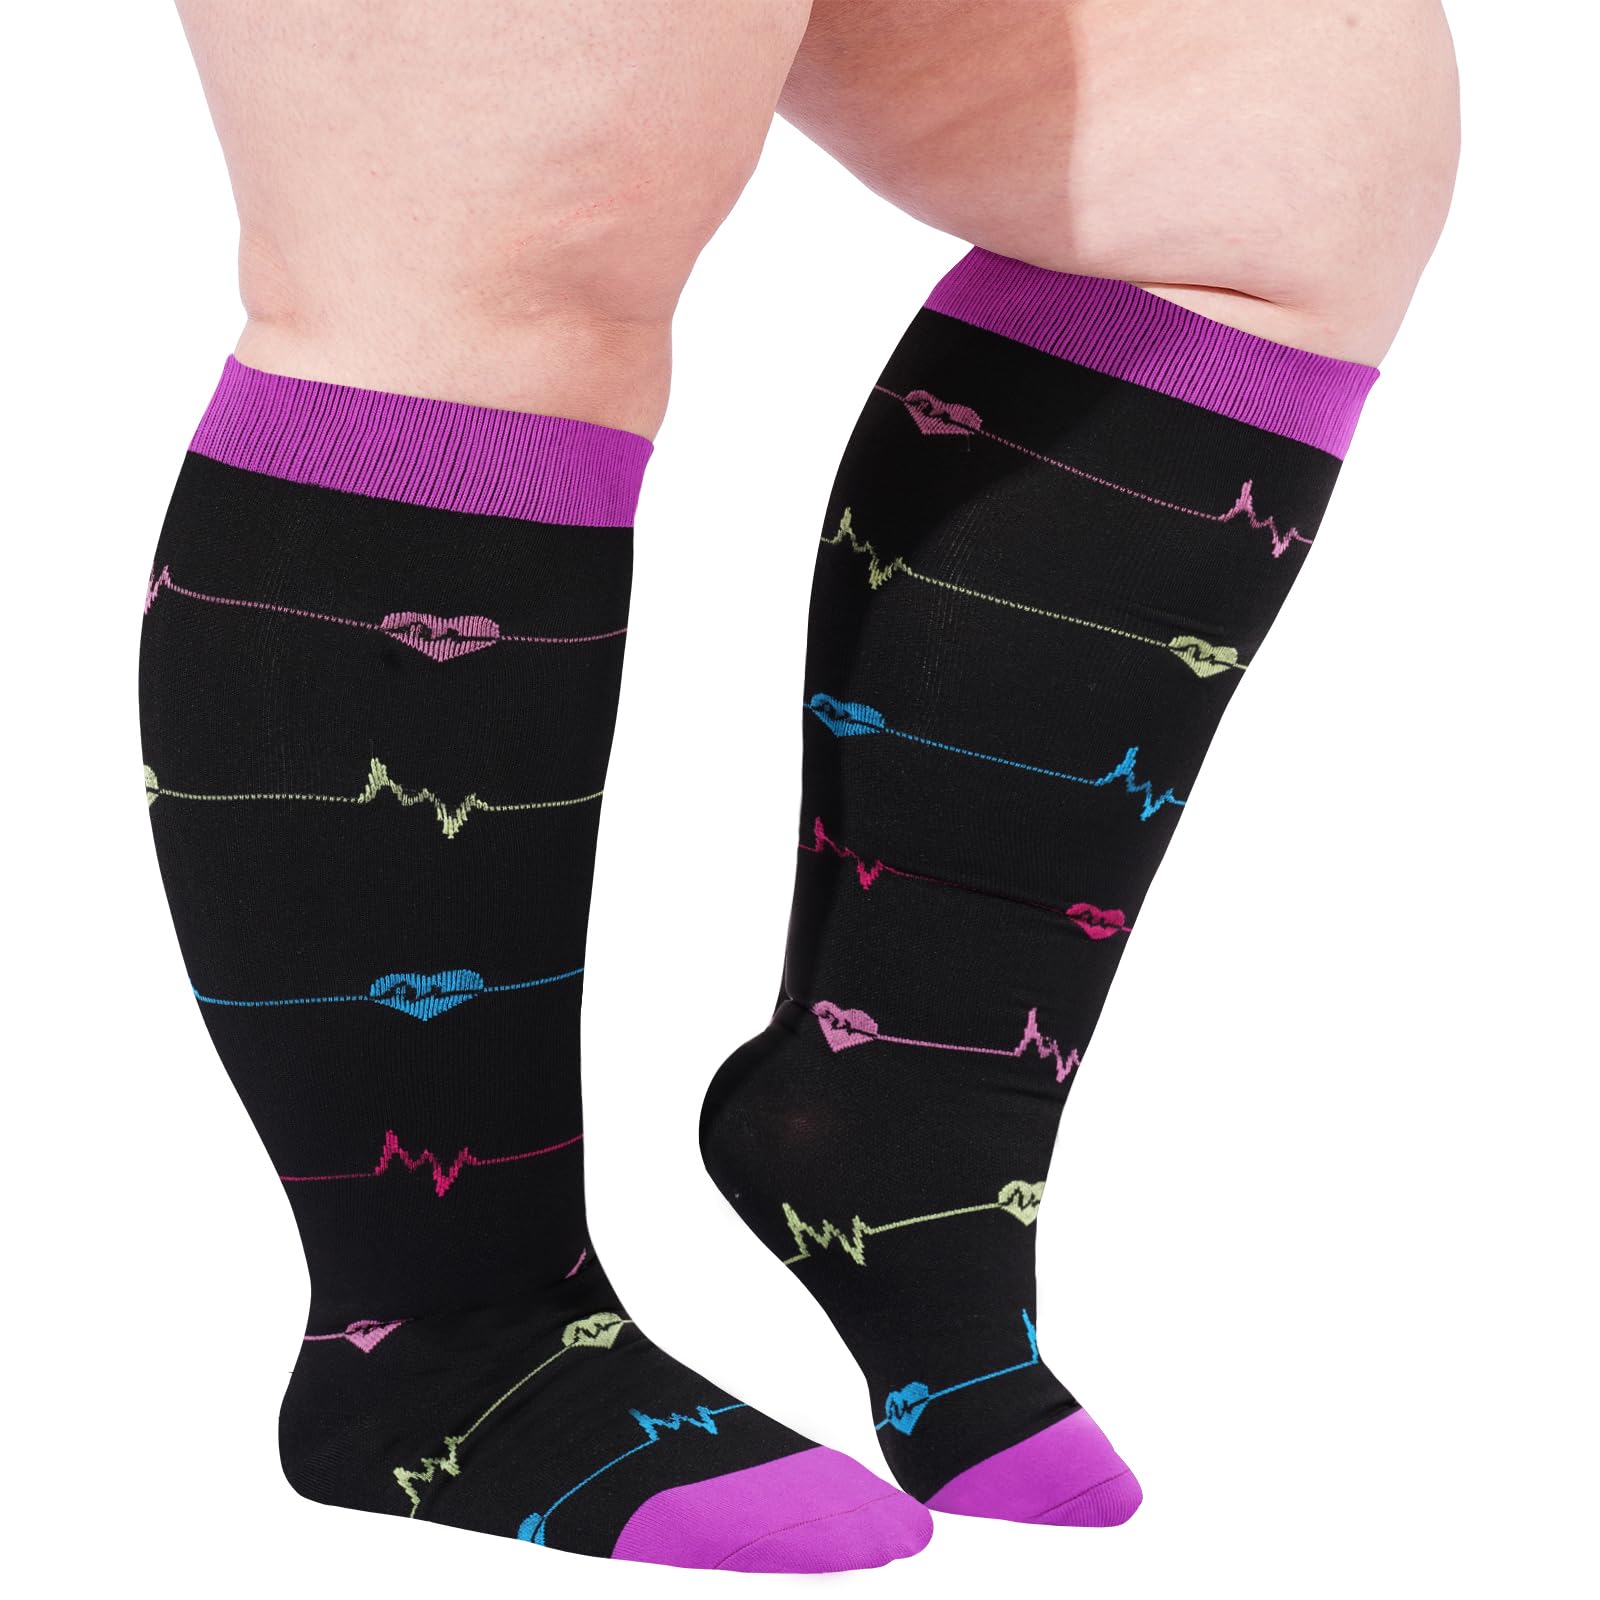 Plus Size Compression Socks for Wide Calf-black Mix Patterns